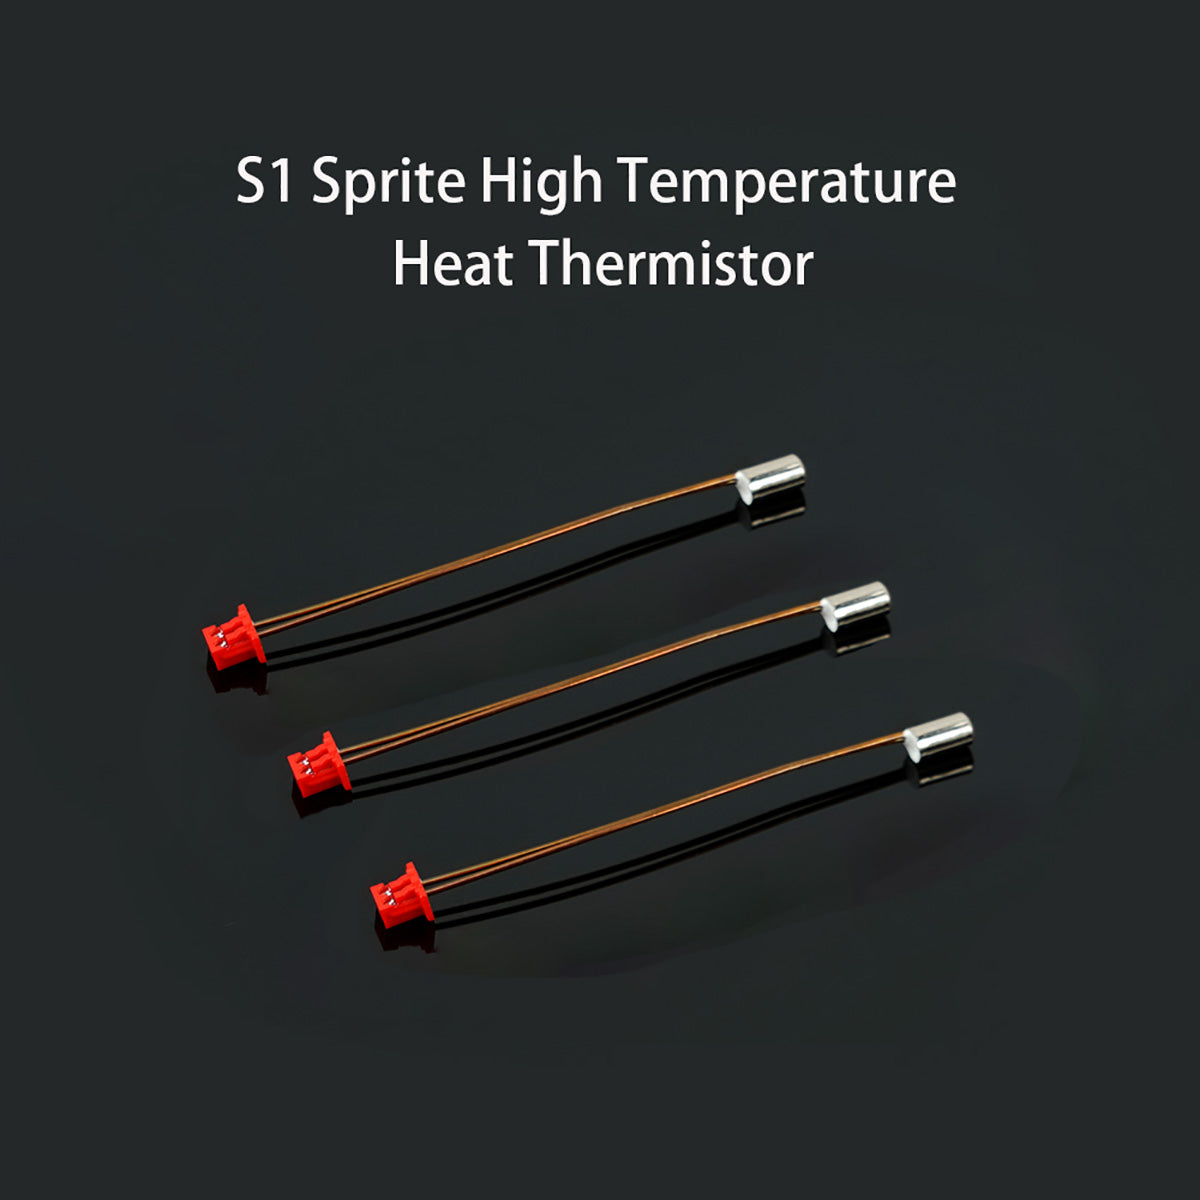 NTC 100K Creality S1 Sprite High Temperature Heat Thermistor — Kingroon 3D